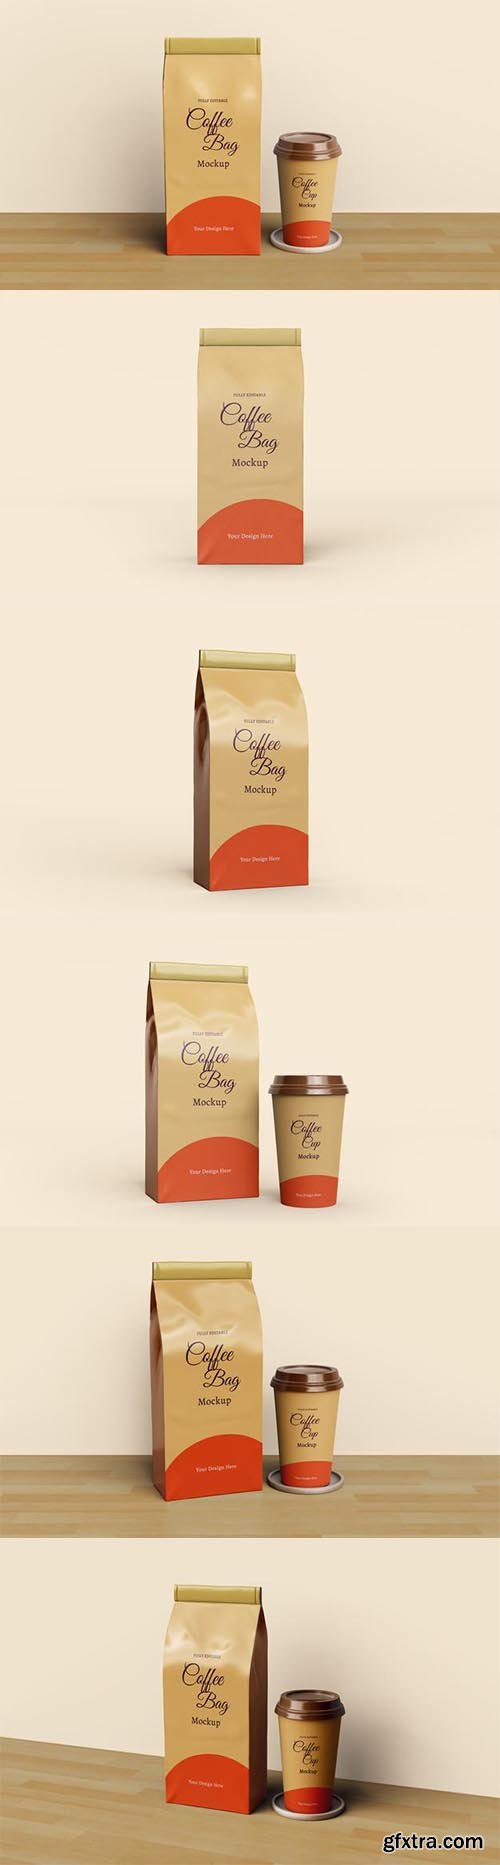 Coffee bag and coffee cup packaging mockup